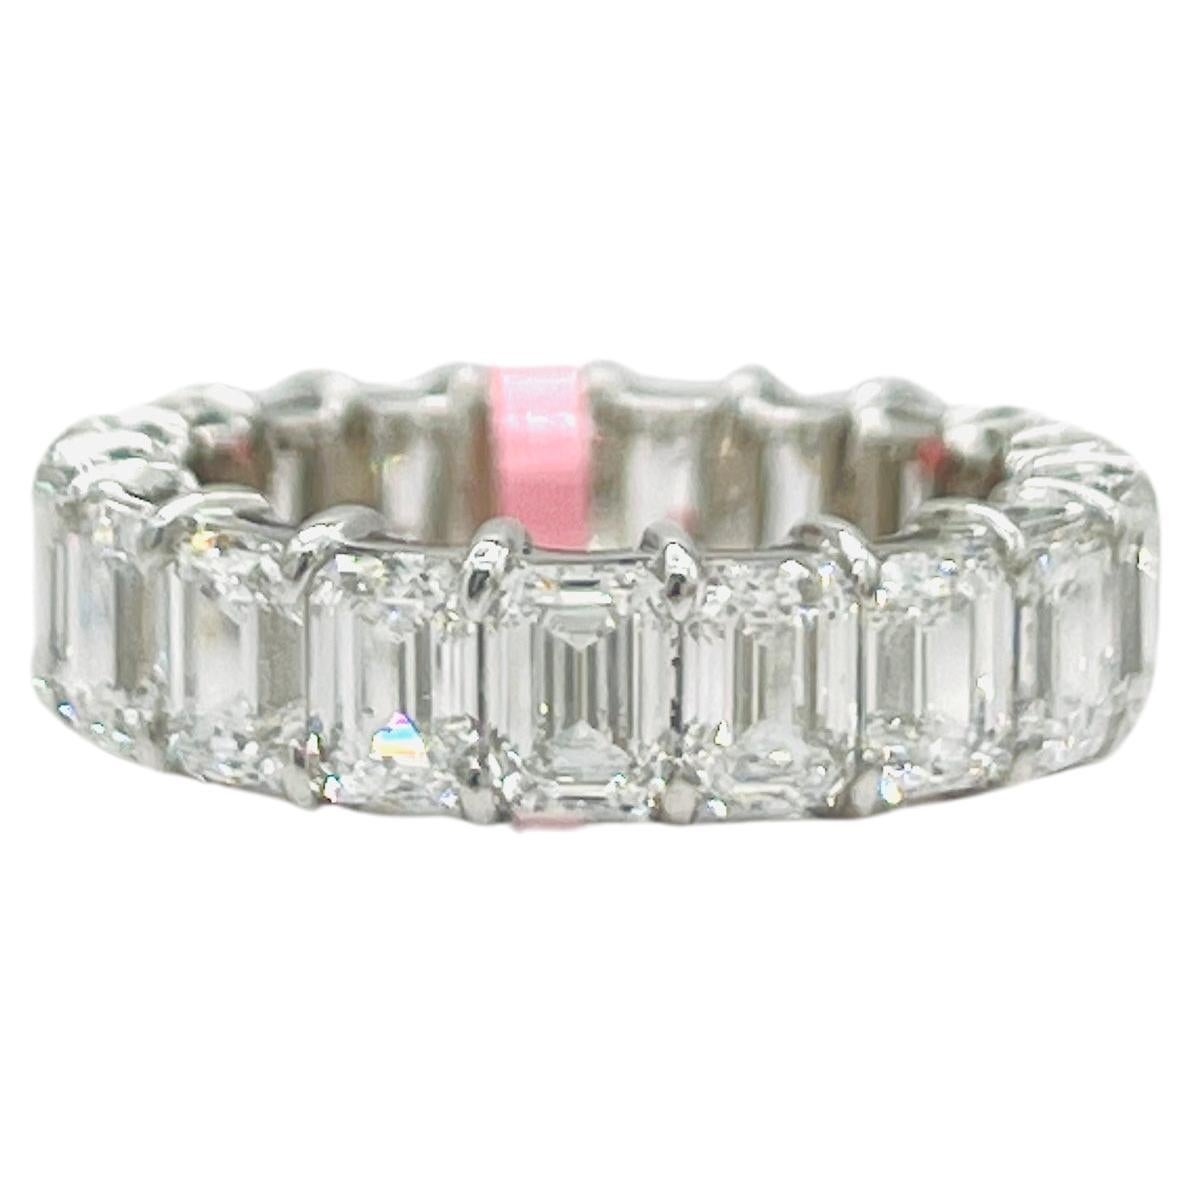 GIA White Diamond Emerald Cut Eternity Band Ring in 18K White Gold